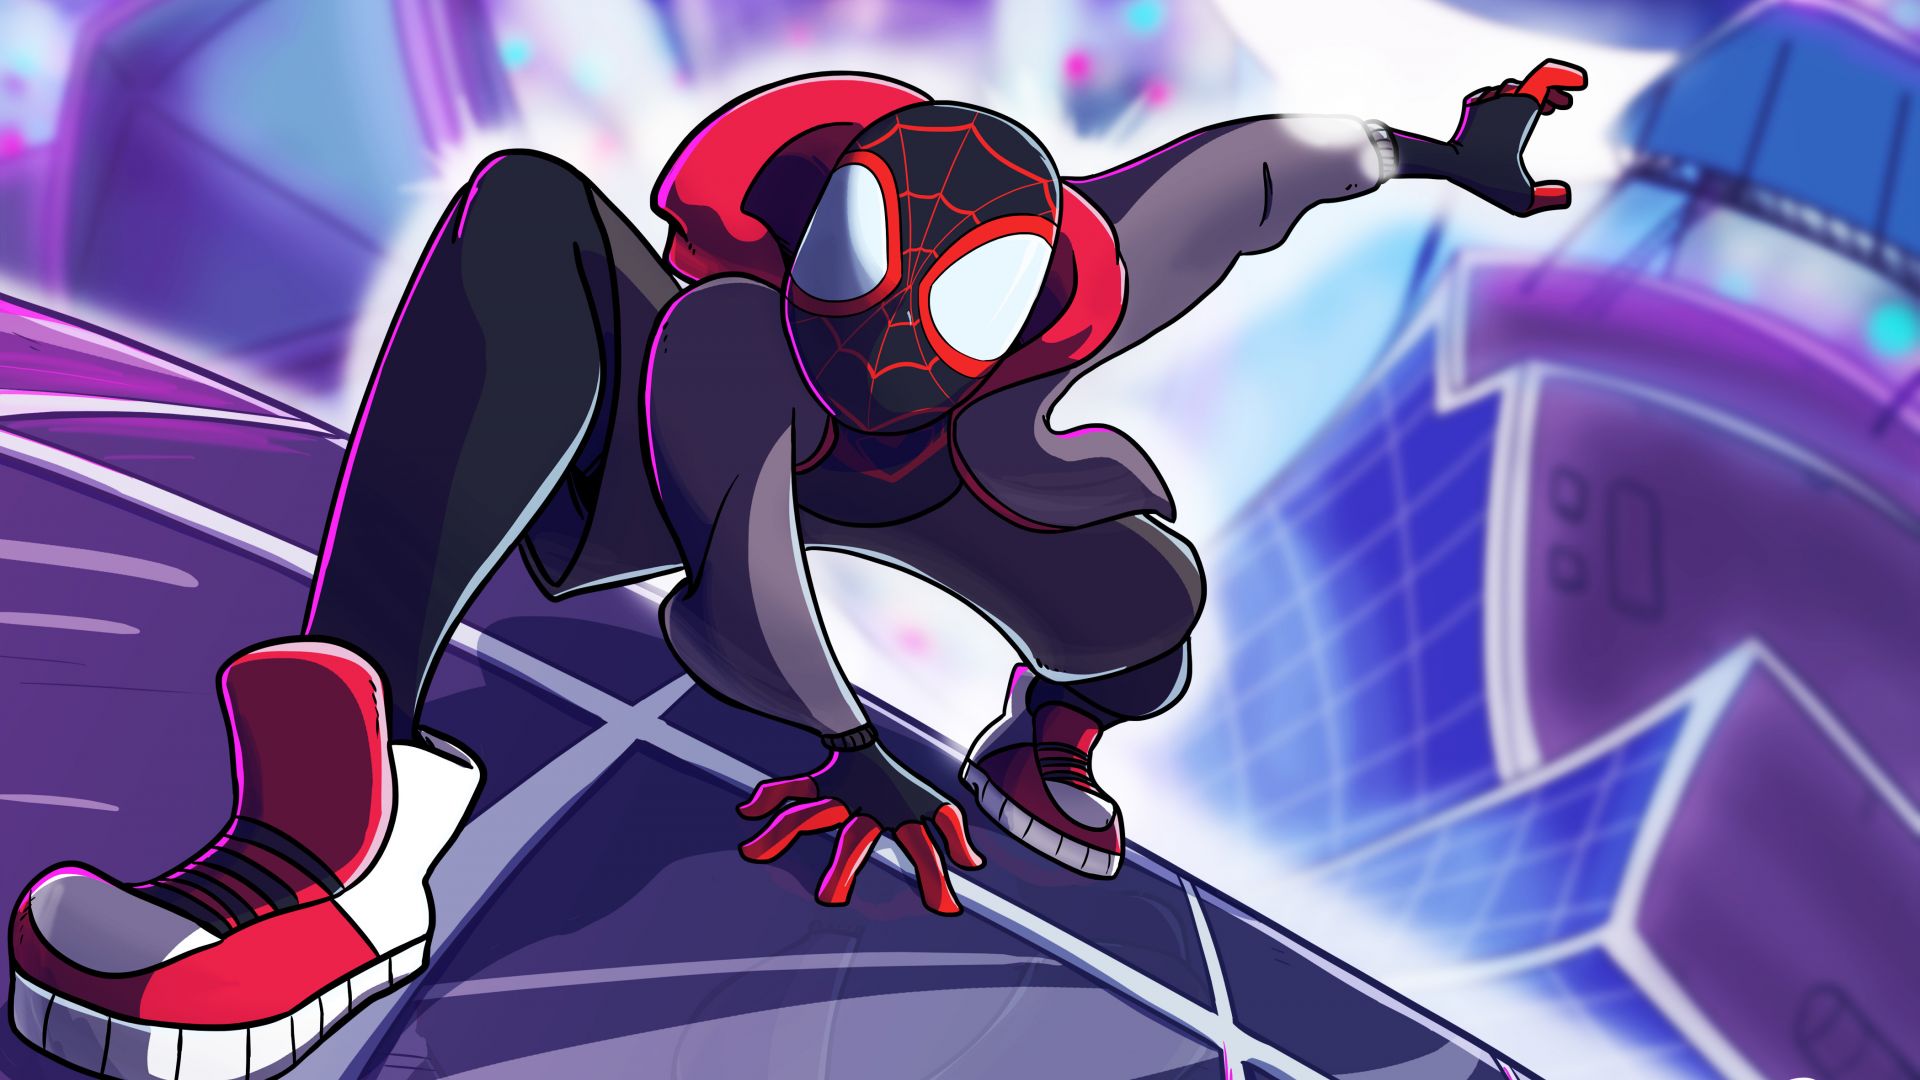 Wallpaper Spider-Man: Into the Spider-Verse, fan art, 2018, artwork, 4k